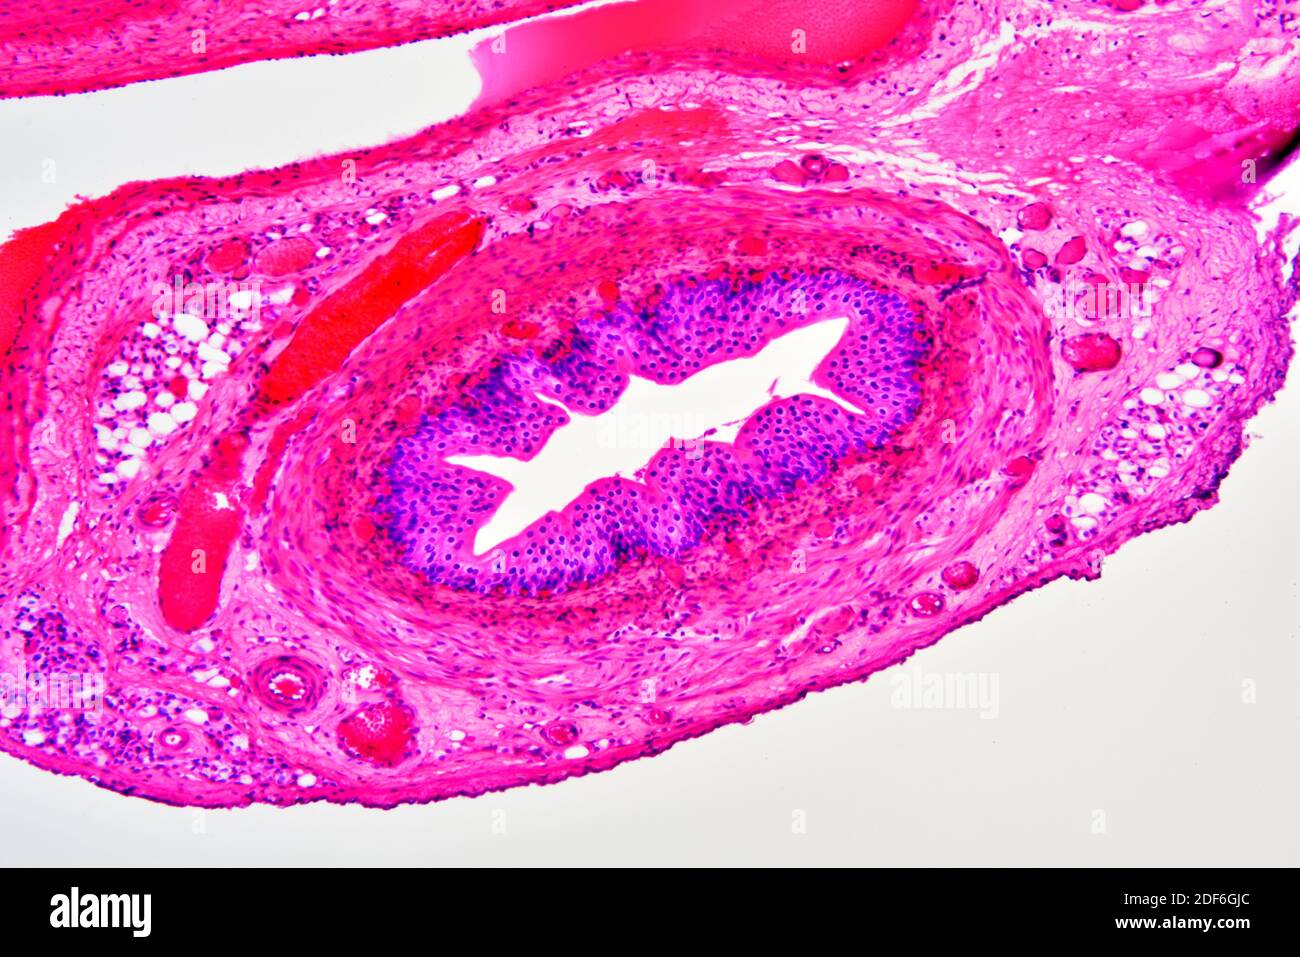 Artery (blood vessel) showing tunica adventitia, media and intima. Optical microscope X100. Stock Photo